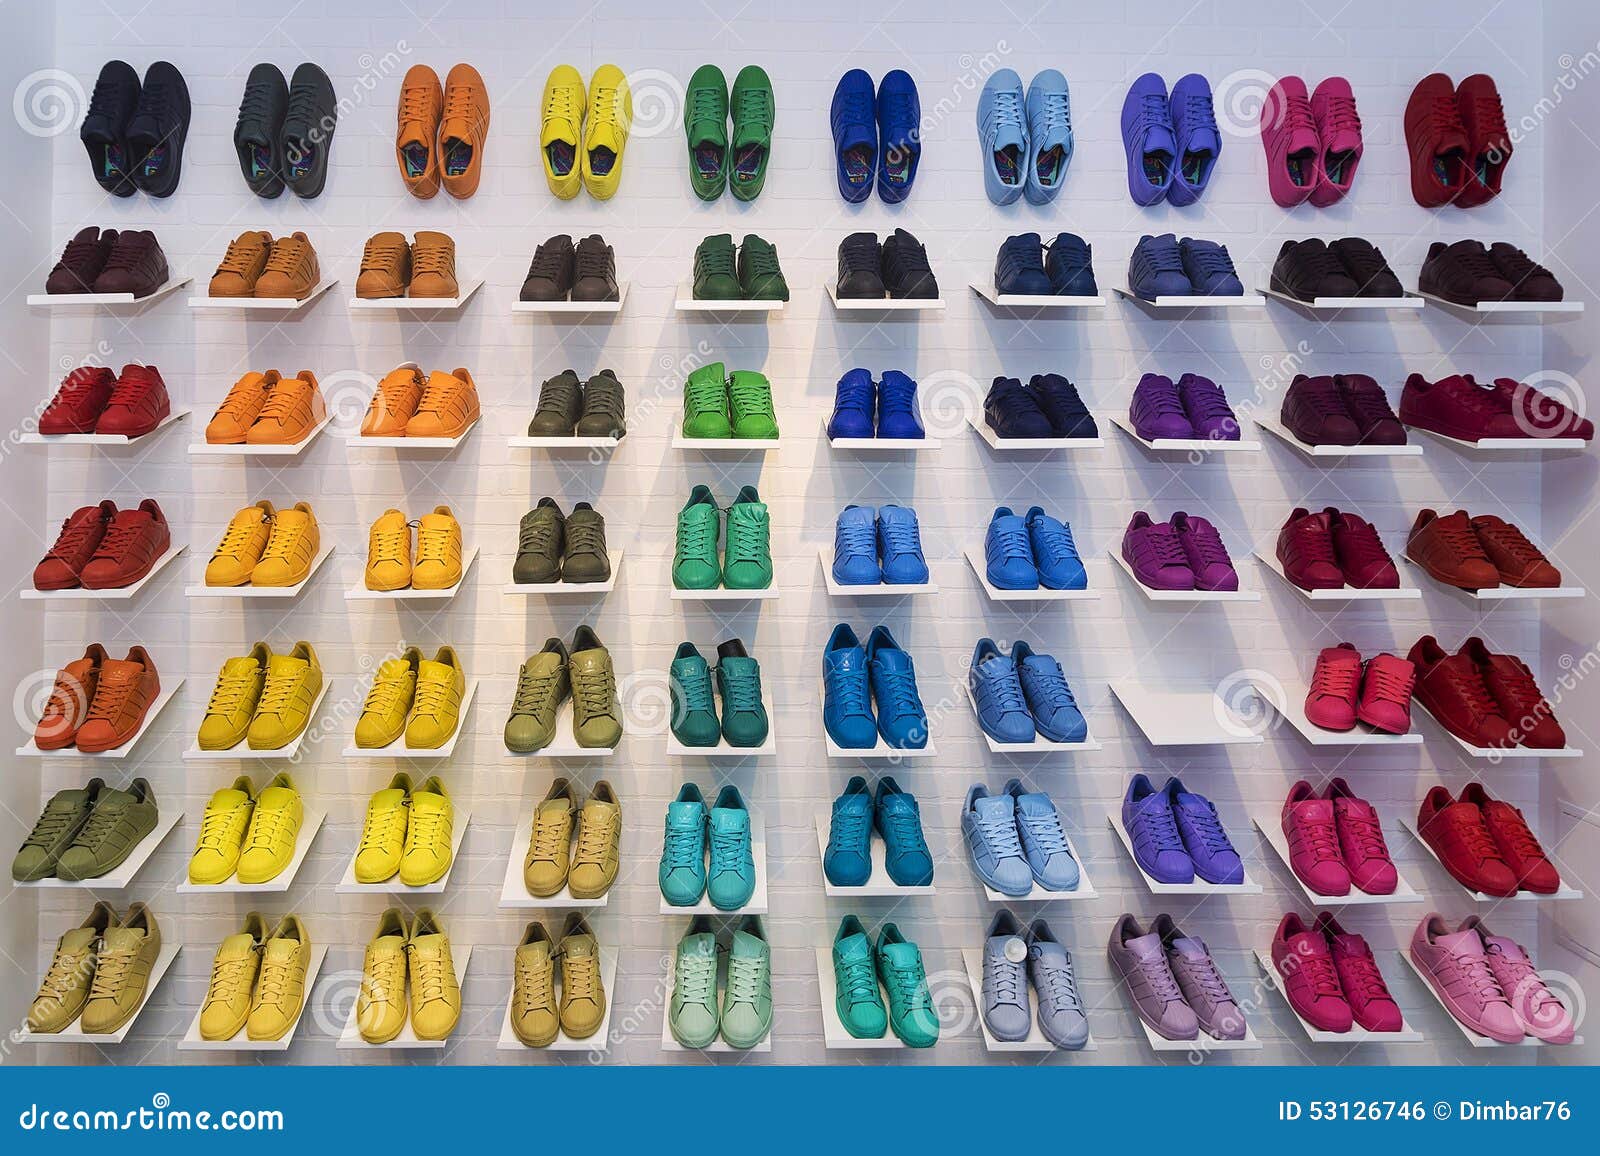 adidas Originals by 84-Lab 2015 Spring/Summer New Arrivals | Hypebeast